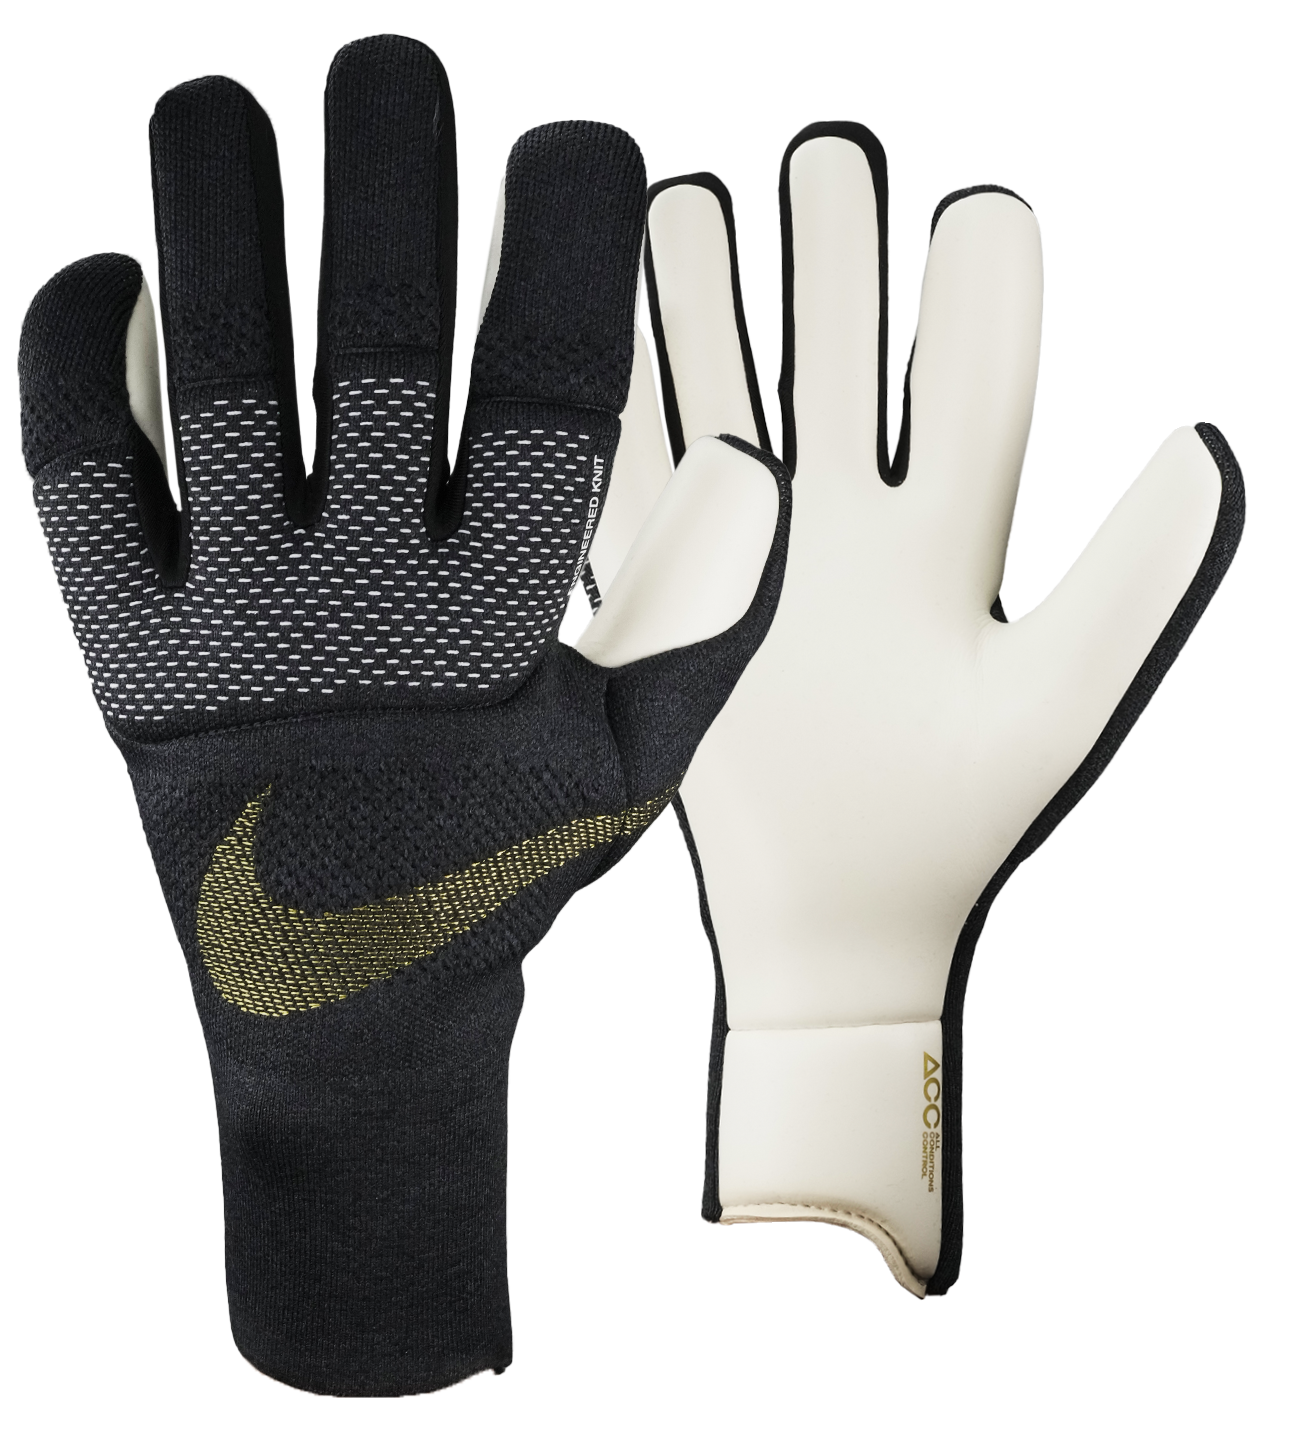 guantes de portero de futbol nike Nike Gk Vapor Dynamic Fit mad ready unokeeper copia